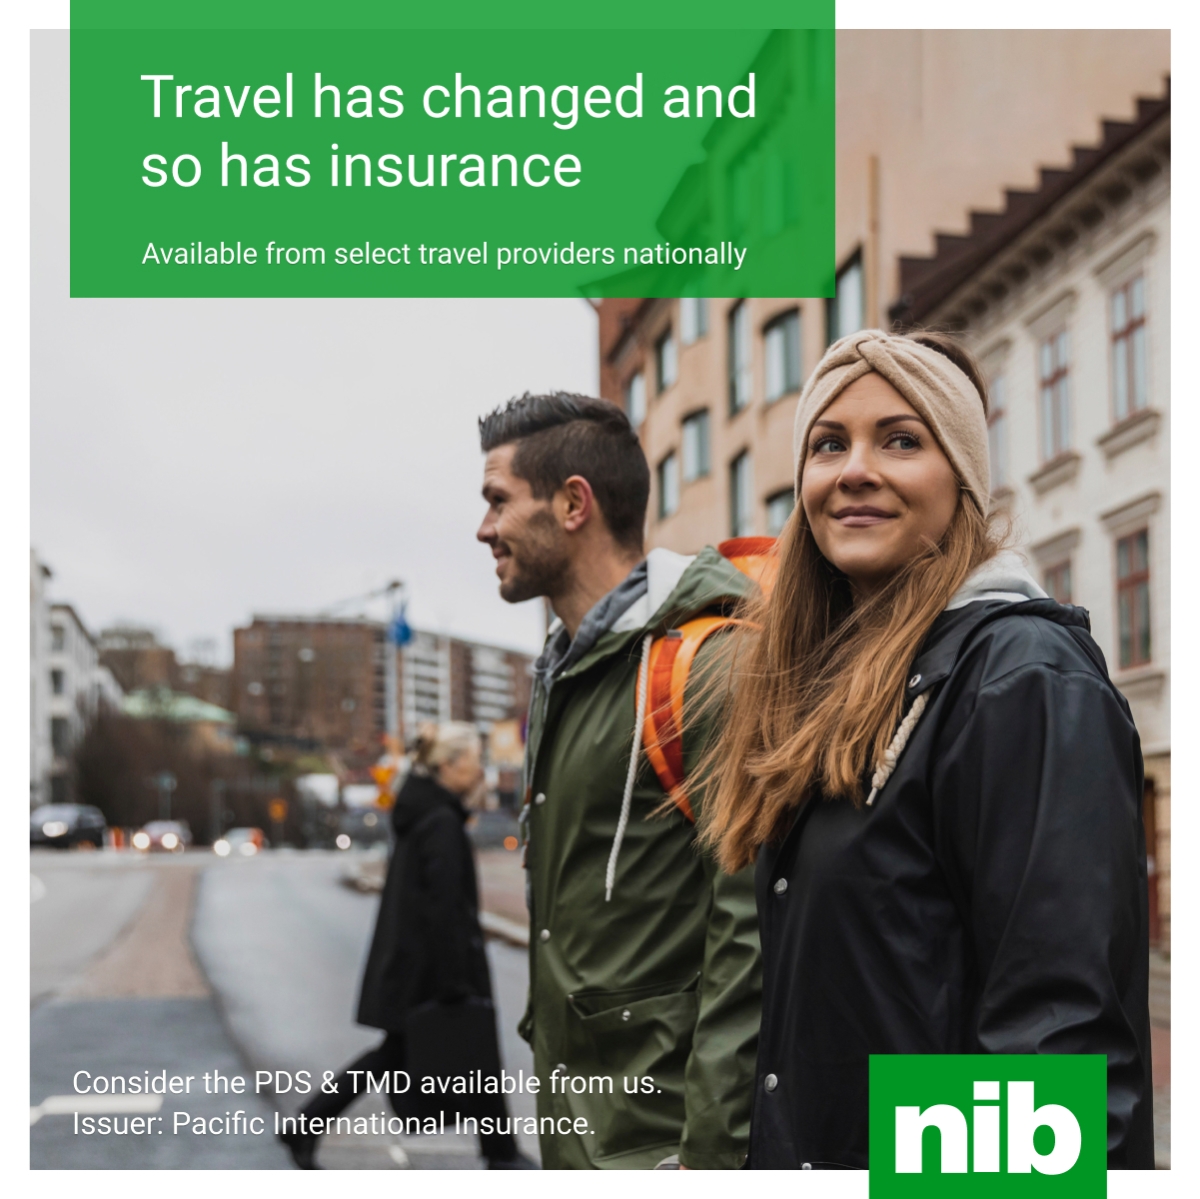 nib travel insurance saver